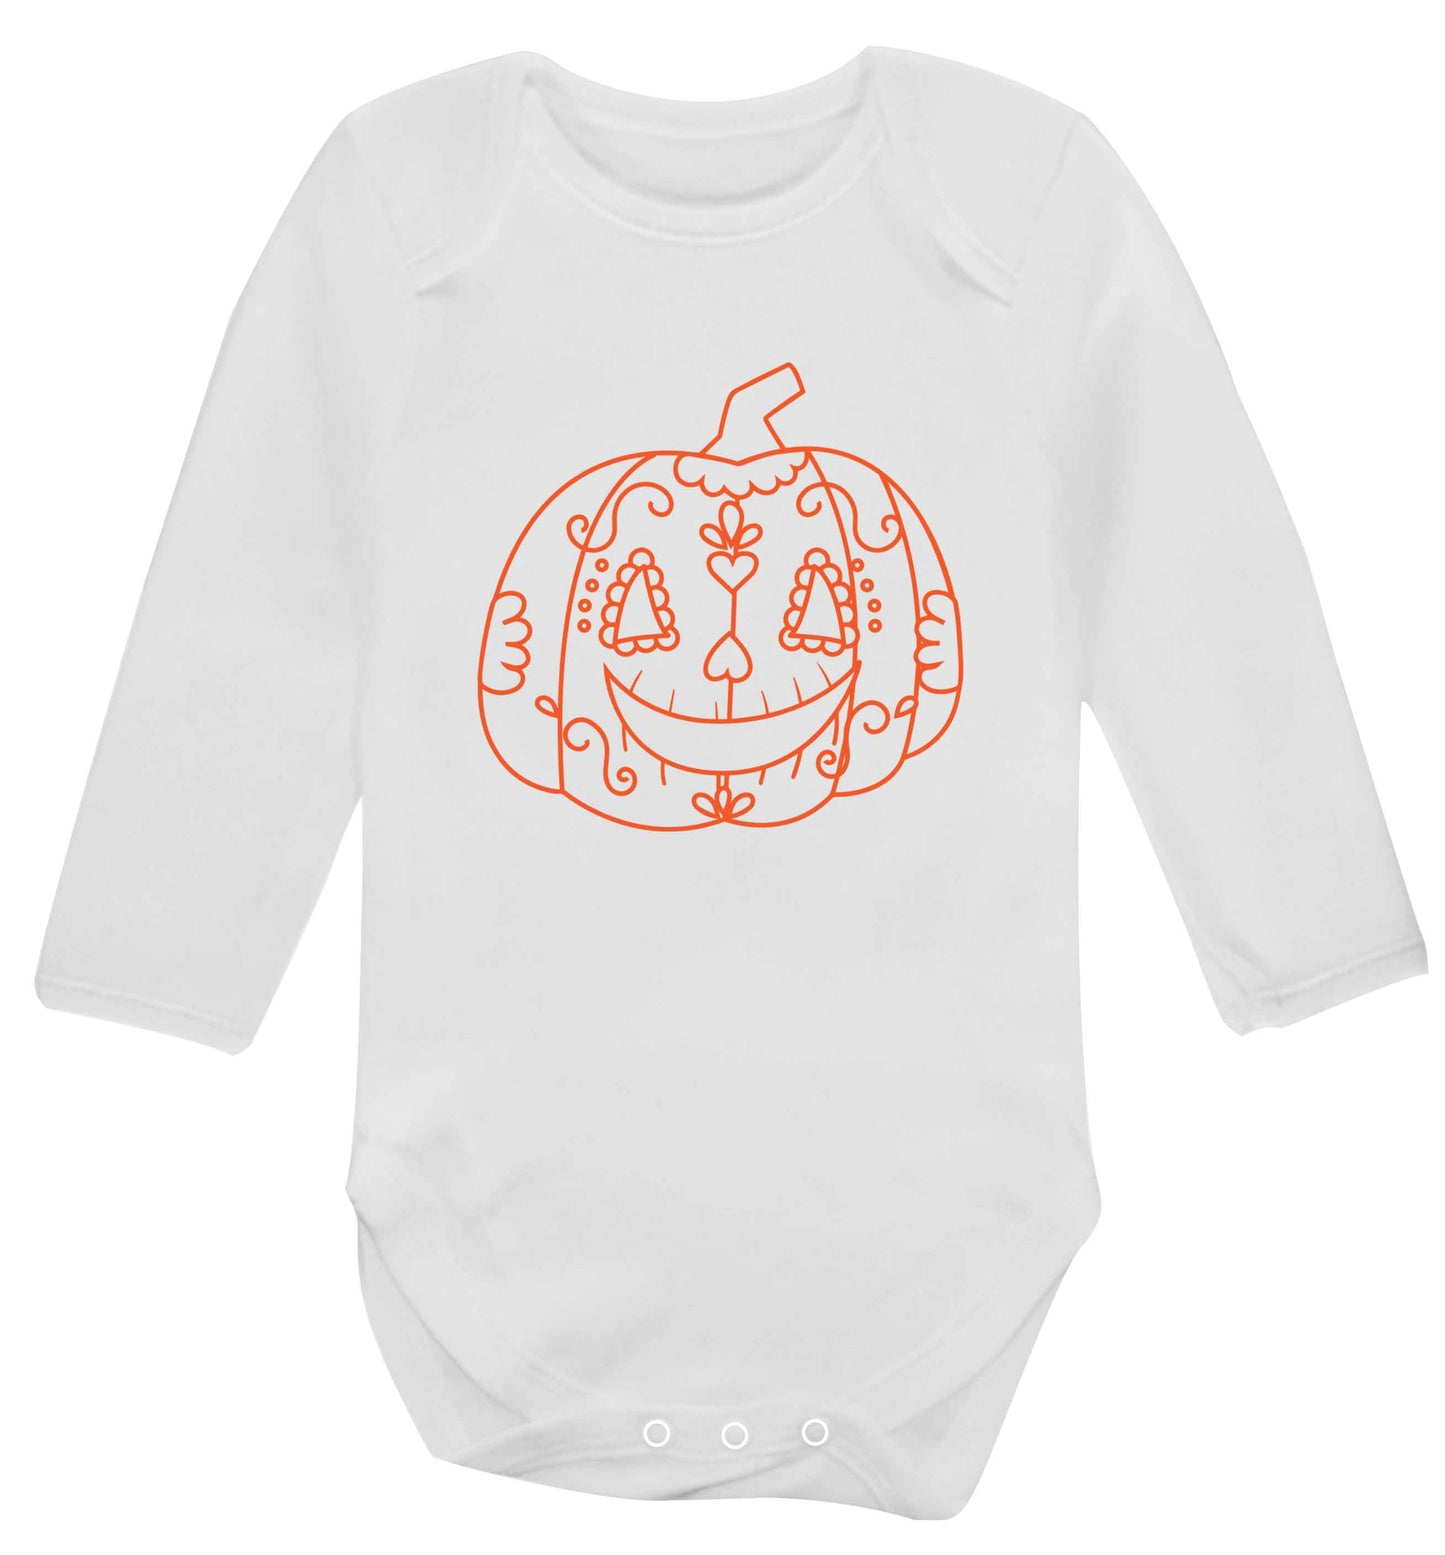 Pumpkin sugar skull baby vest long sleeved white 6-12 months